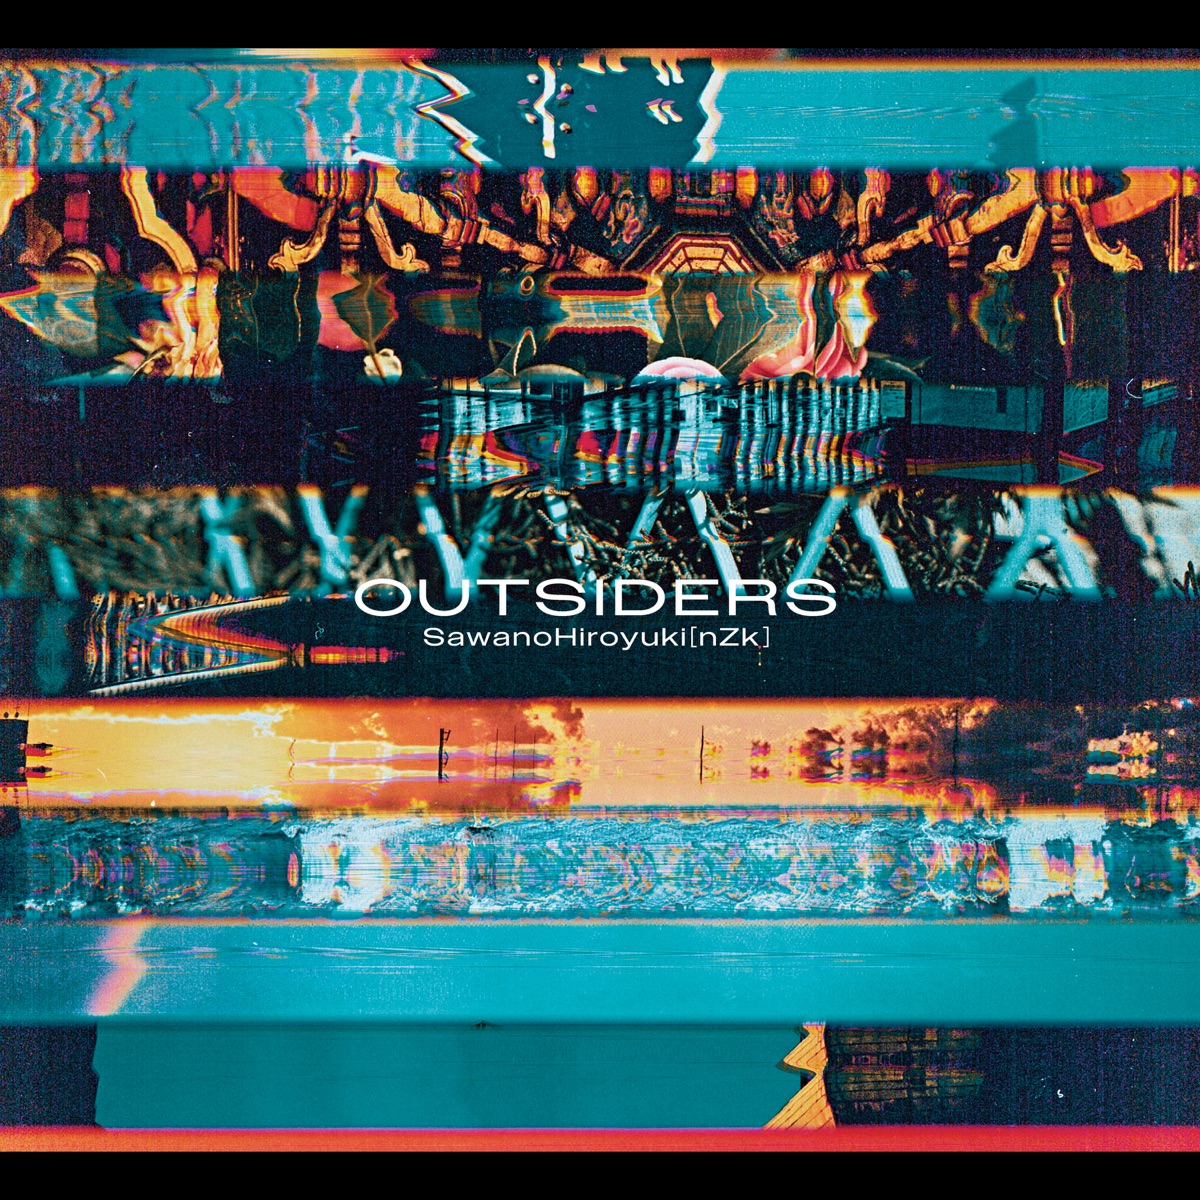 Cover for『SawanoHiroyuki[nZk]:Junki Kono & Sho Yonashiro (JO1) - OUTSIDERS』from the release『OUTSIDERS』